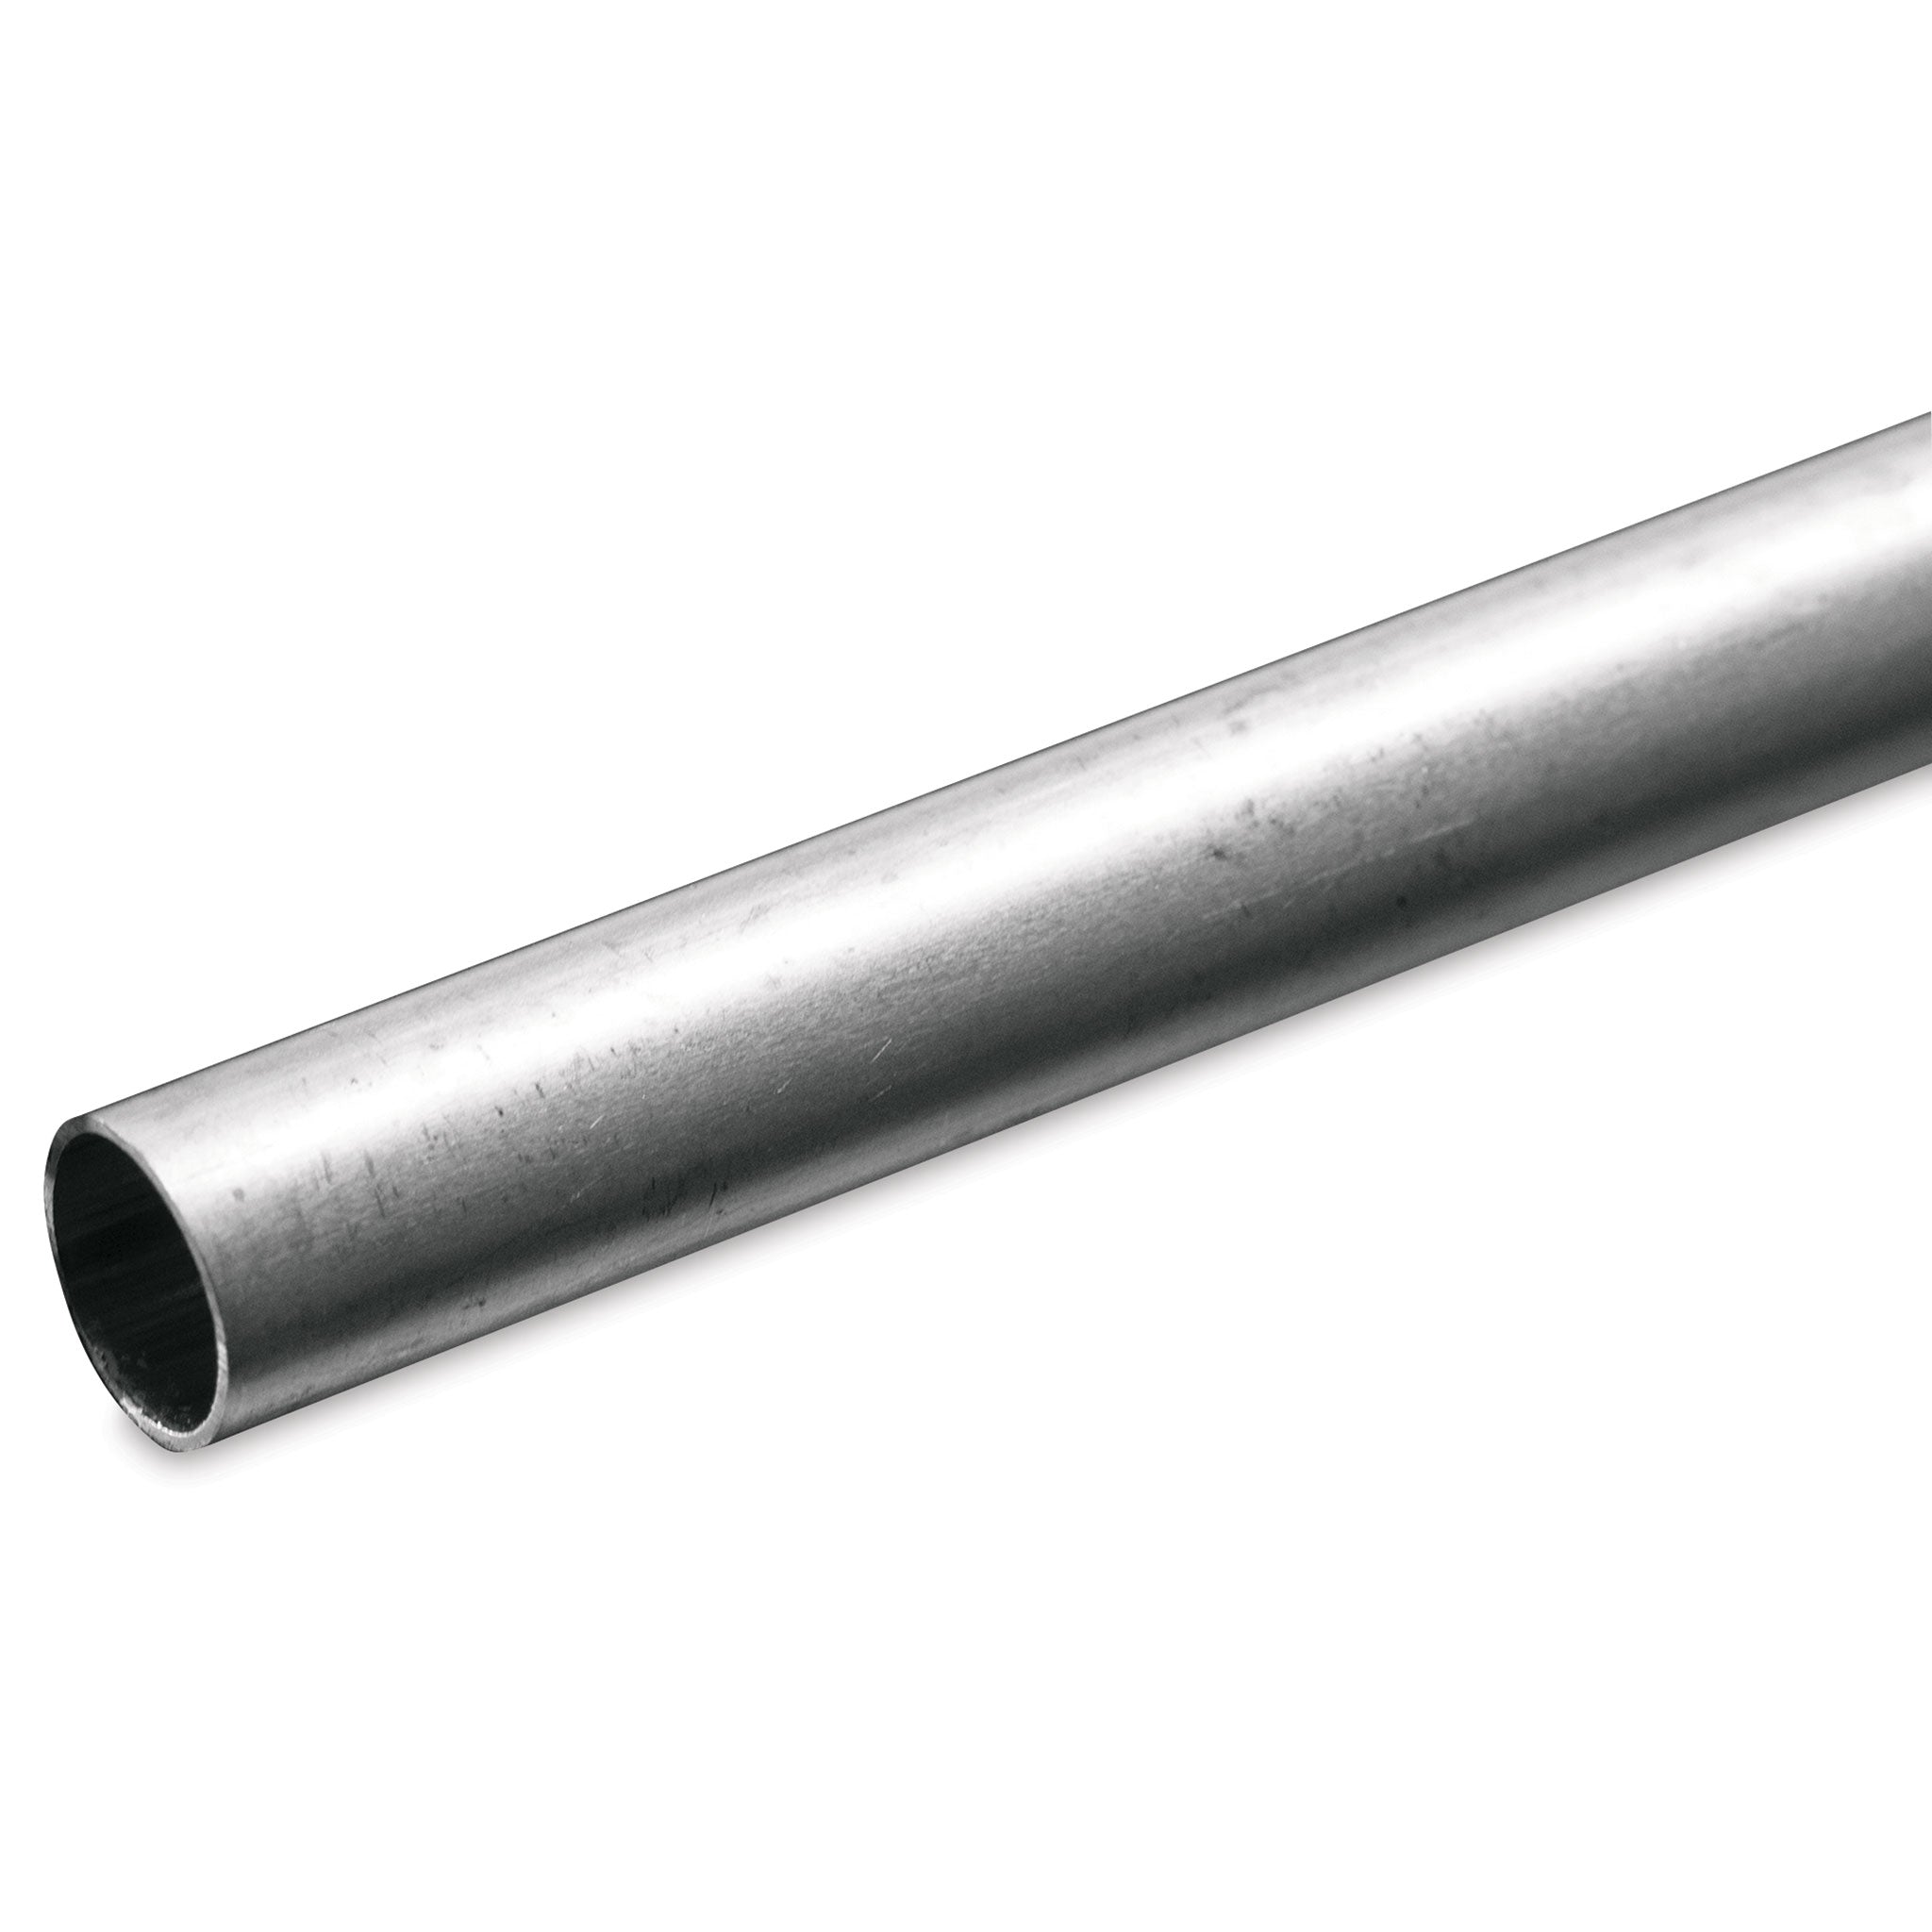 K&S Metals 1115 Round Aluminum Tube 5/16" OD x 0.014" Wall x 36" Long (1 Piece)